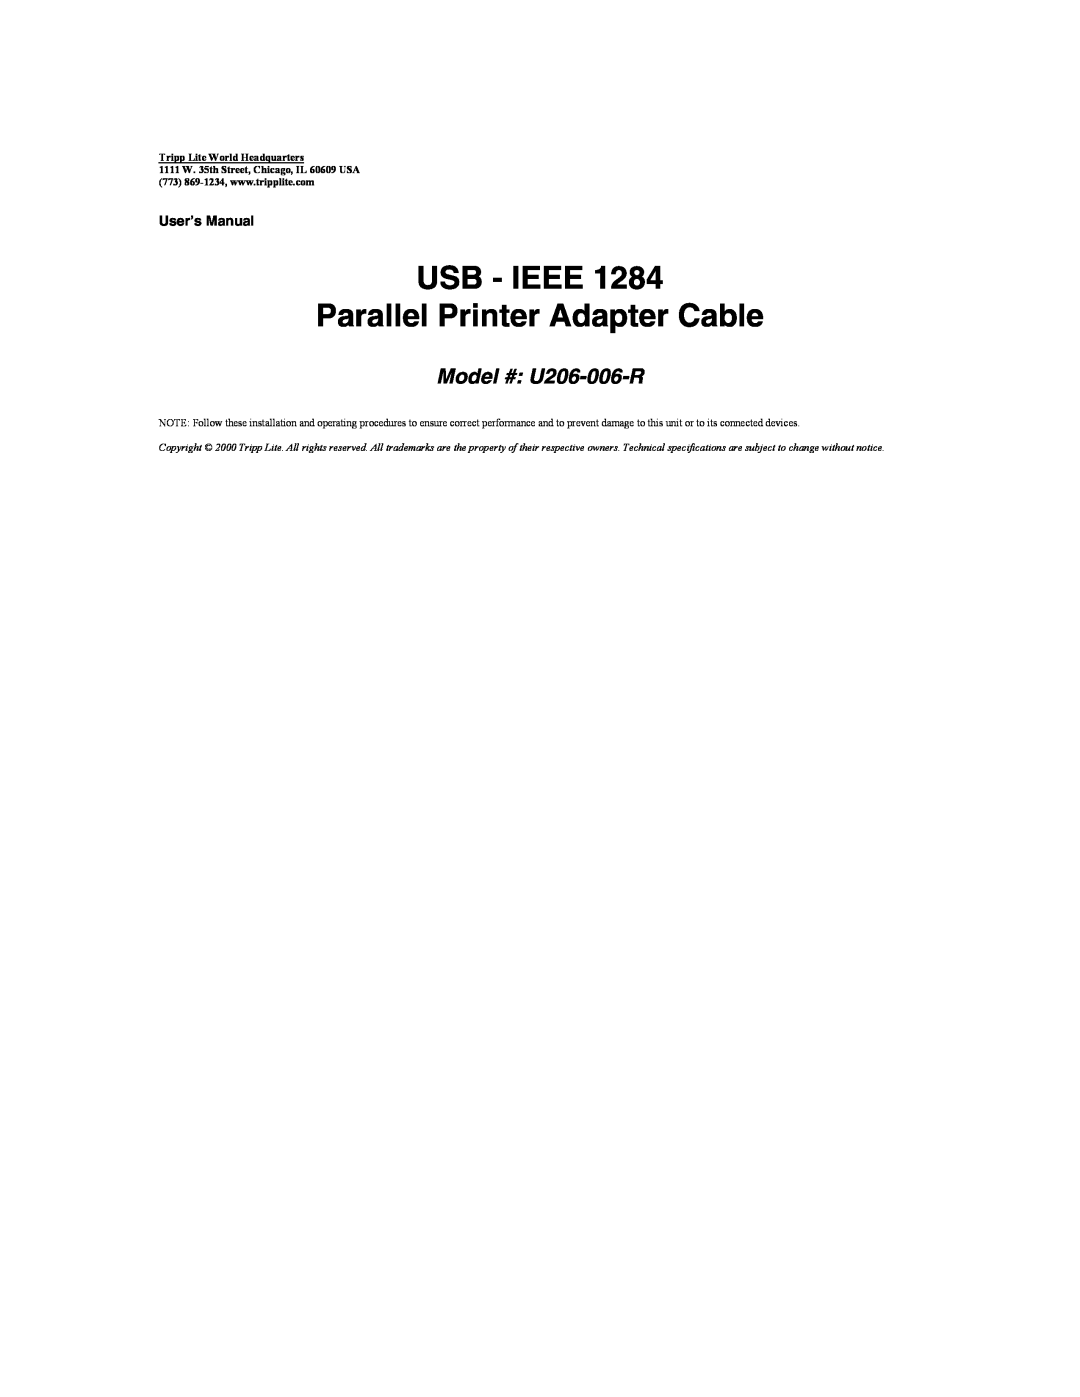 Tripp Lite user manual USB - IEEE Parallel Printer Adapter Cable, Model # U206-006-R, User’s Manual 